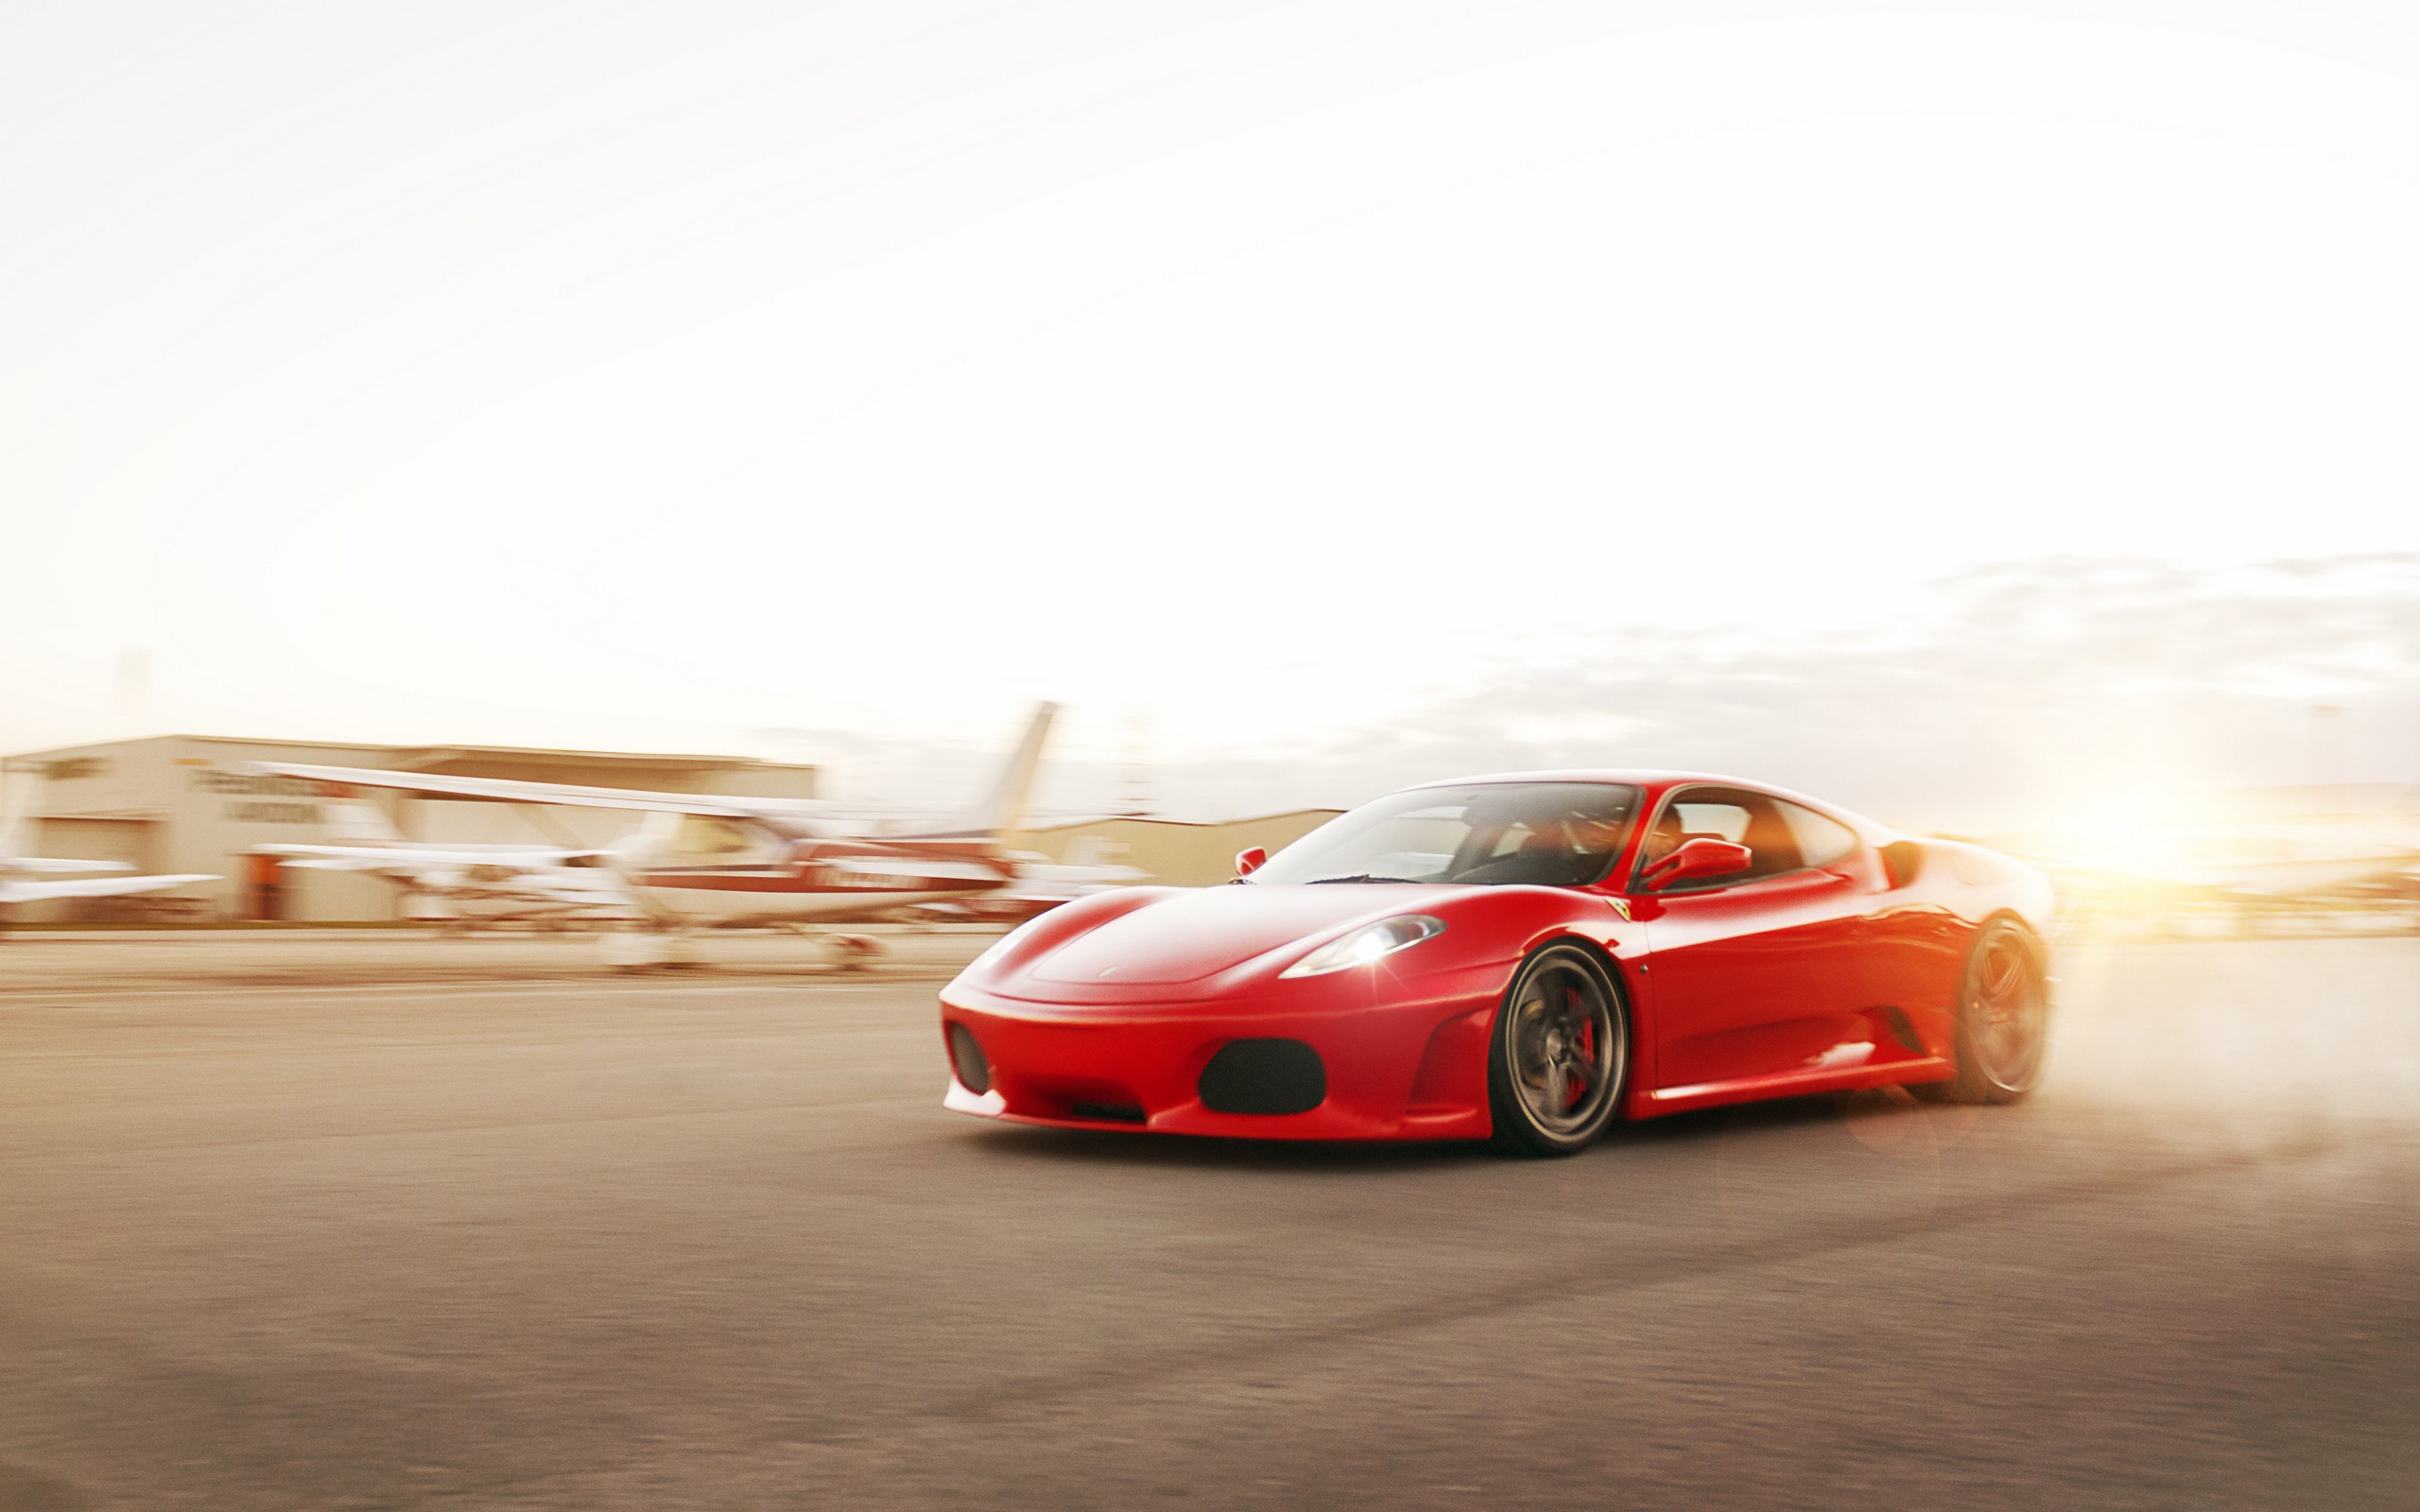 cars, airports, red cars, Ferrari F430 - desktop wallpaper